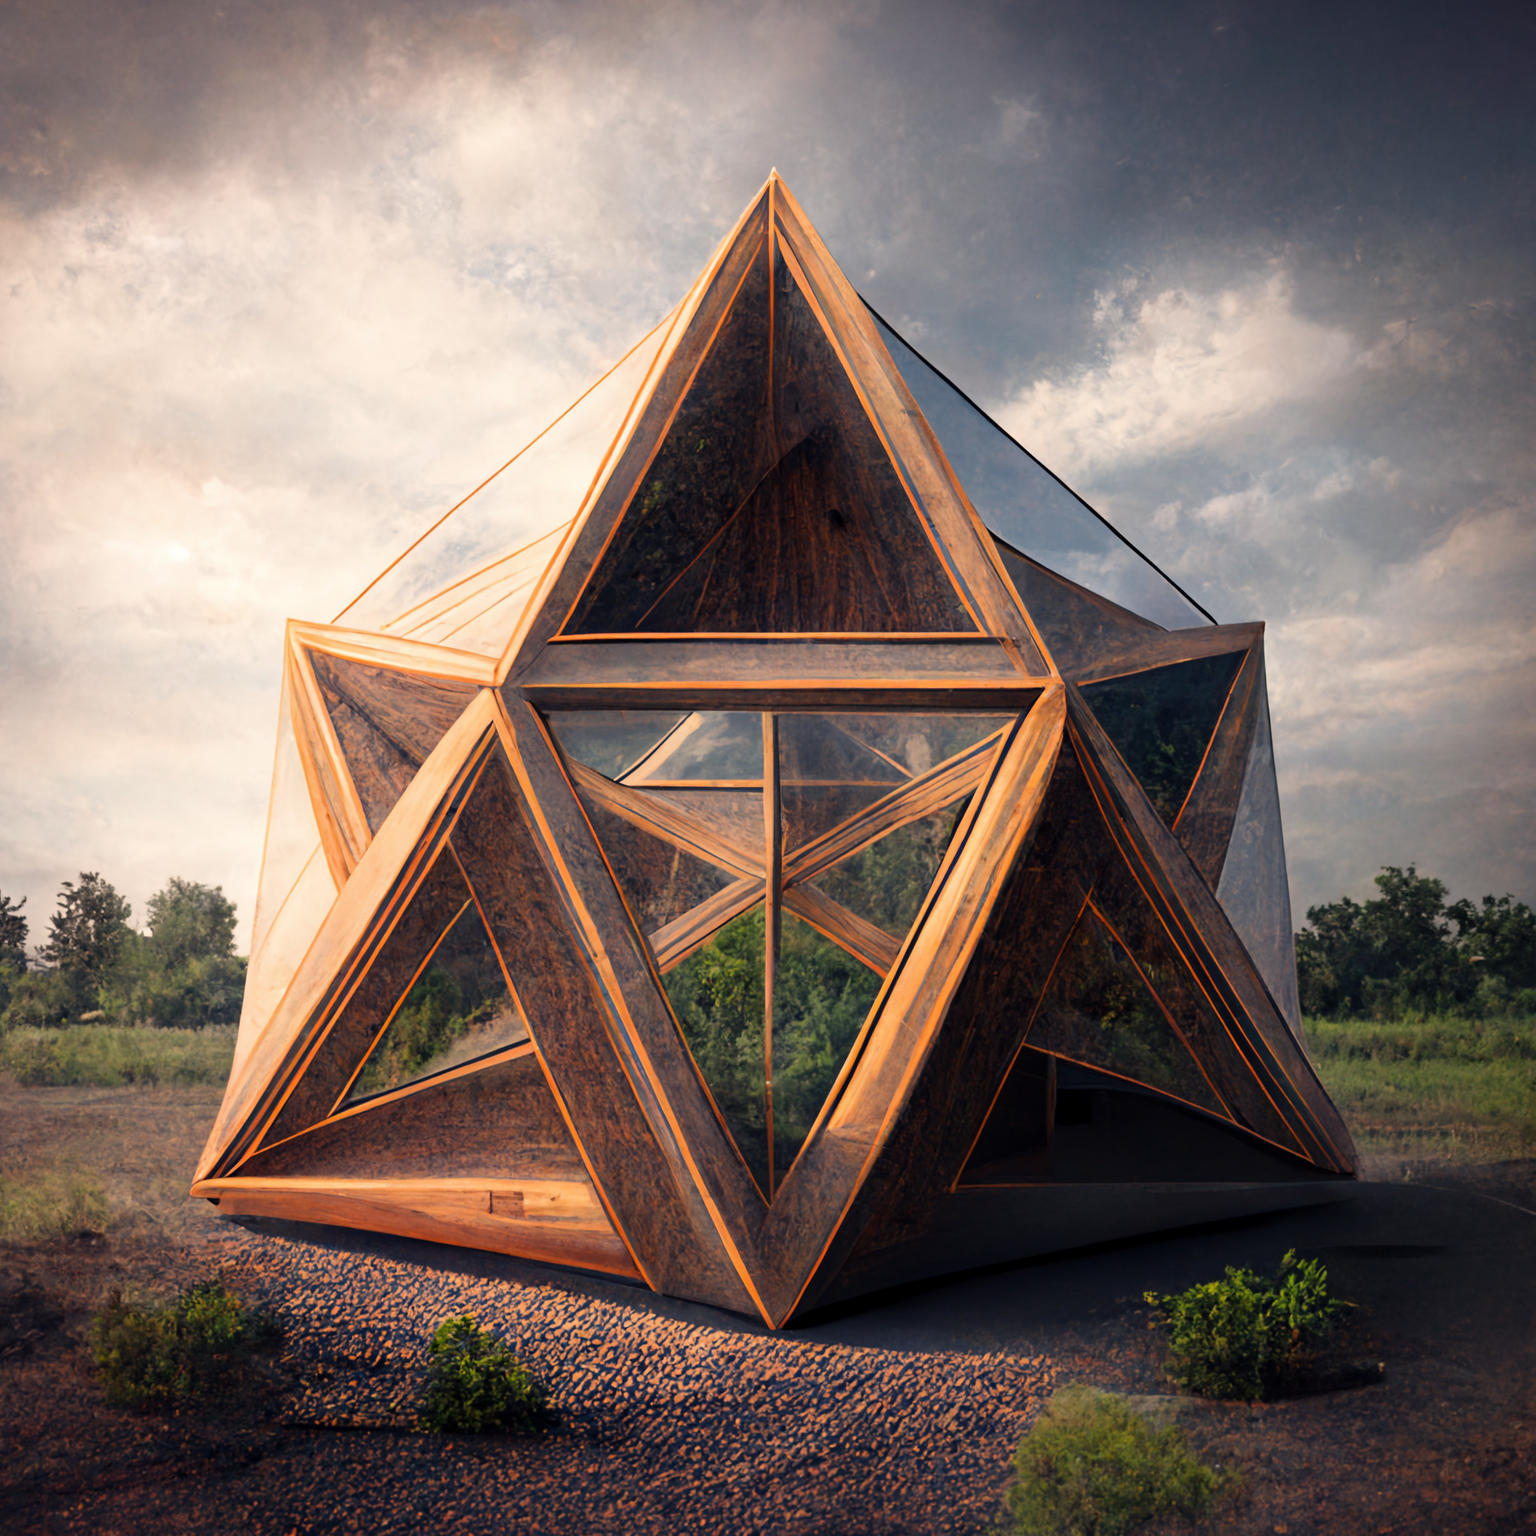 sacred geometry design